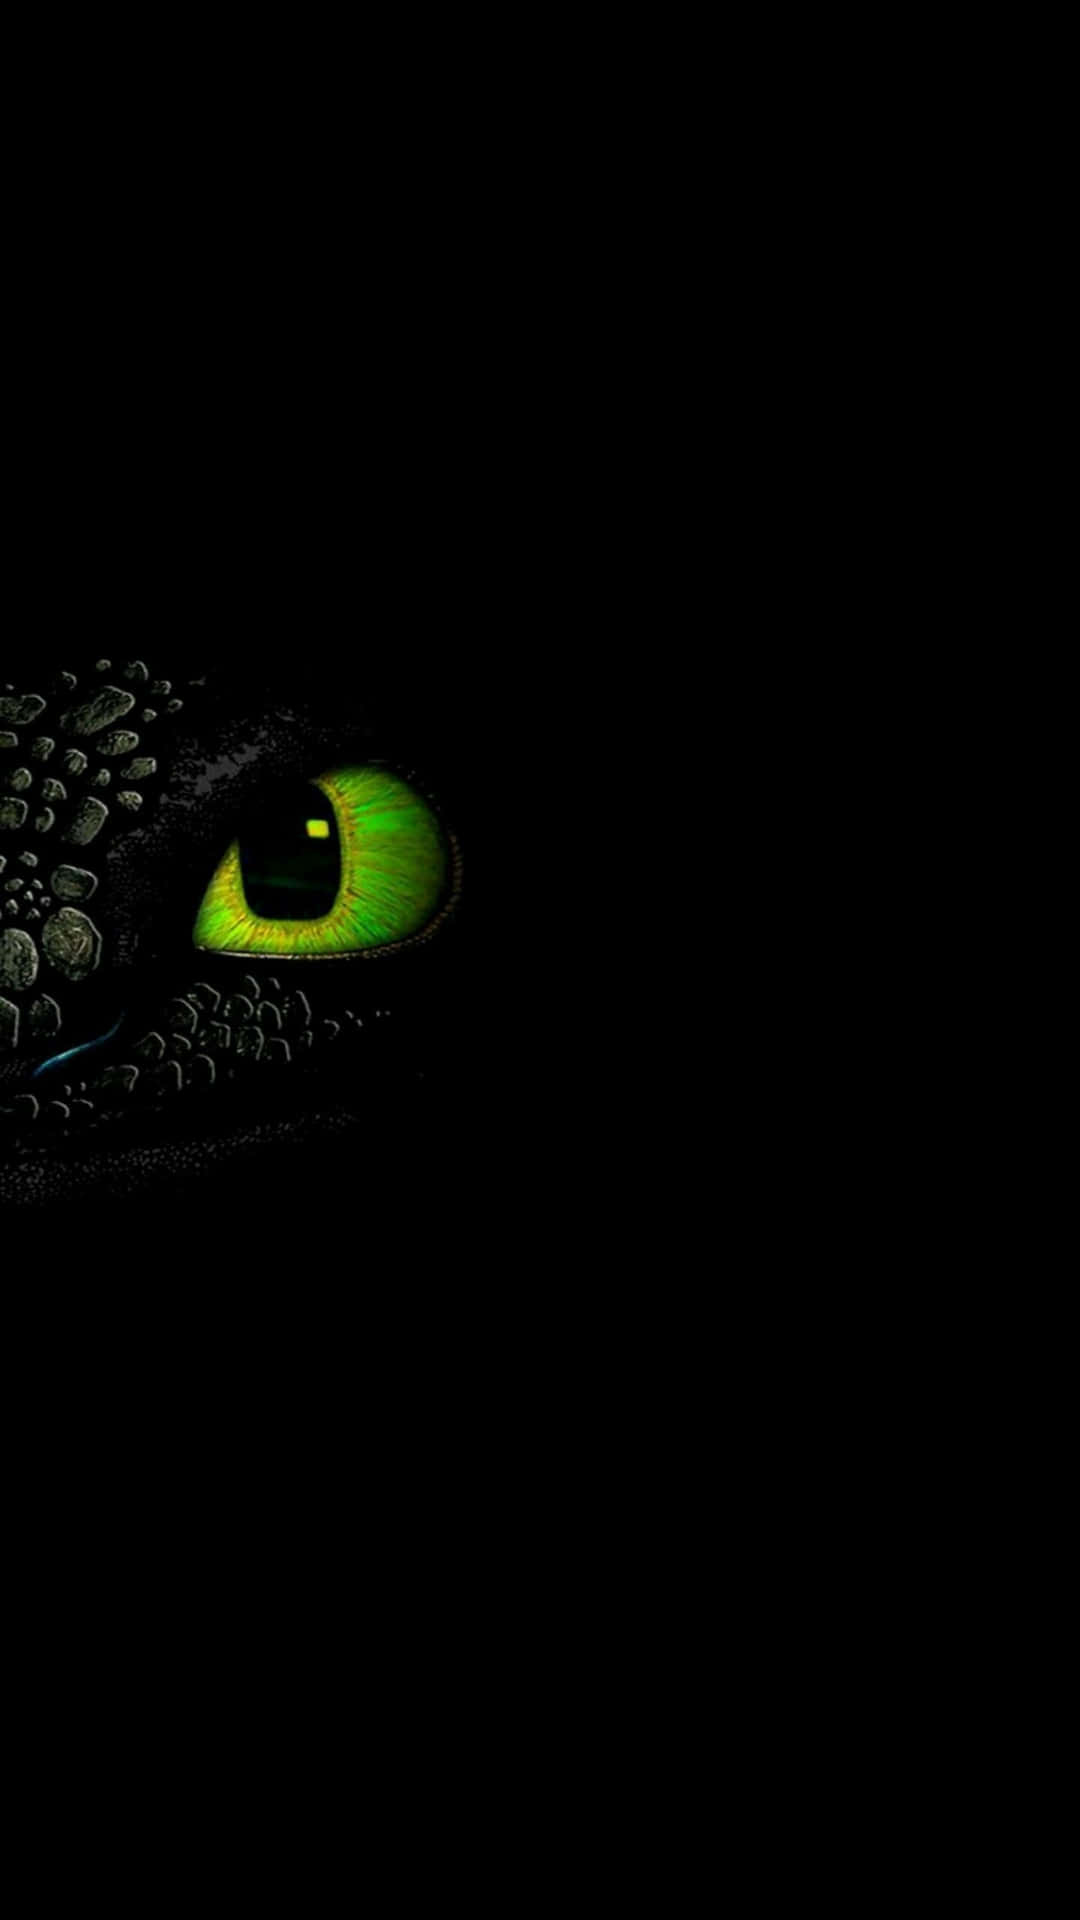 Toothless Dragon Eye Closeup Wallpaper